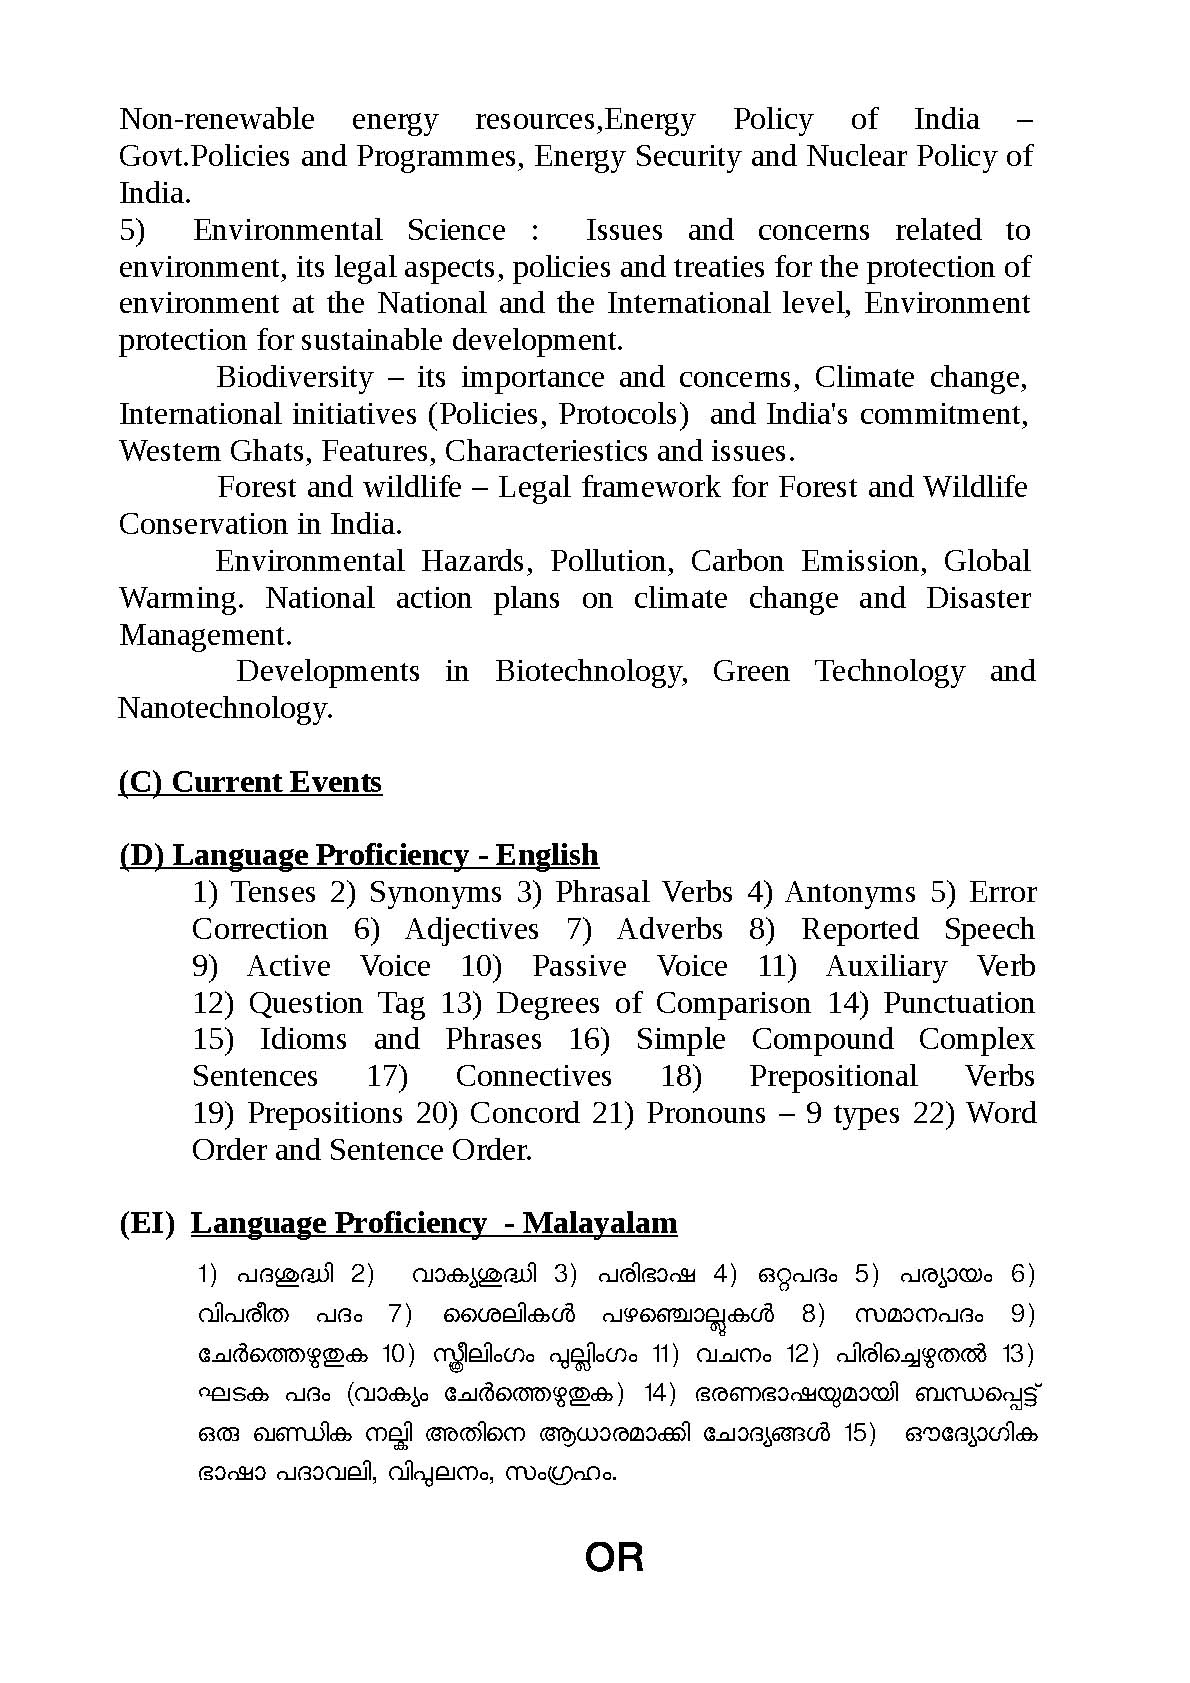 Kerala Administrative Service Preliminary Exam Syllabus - Notification Image 5